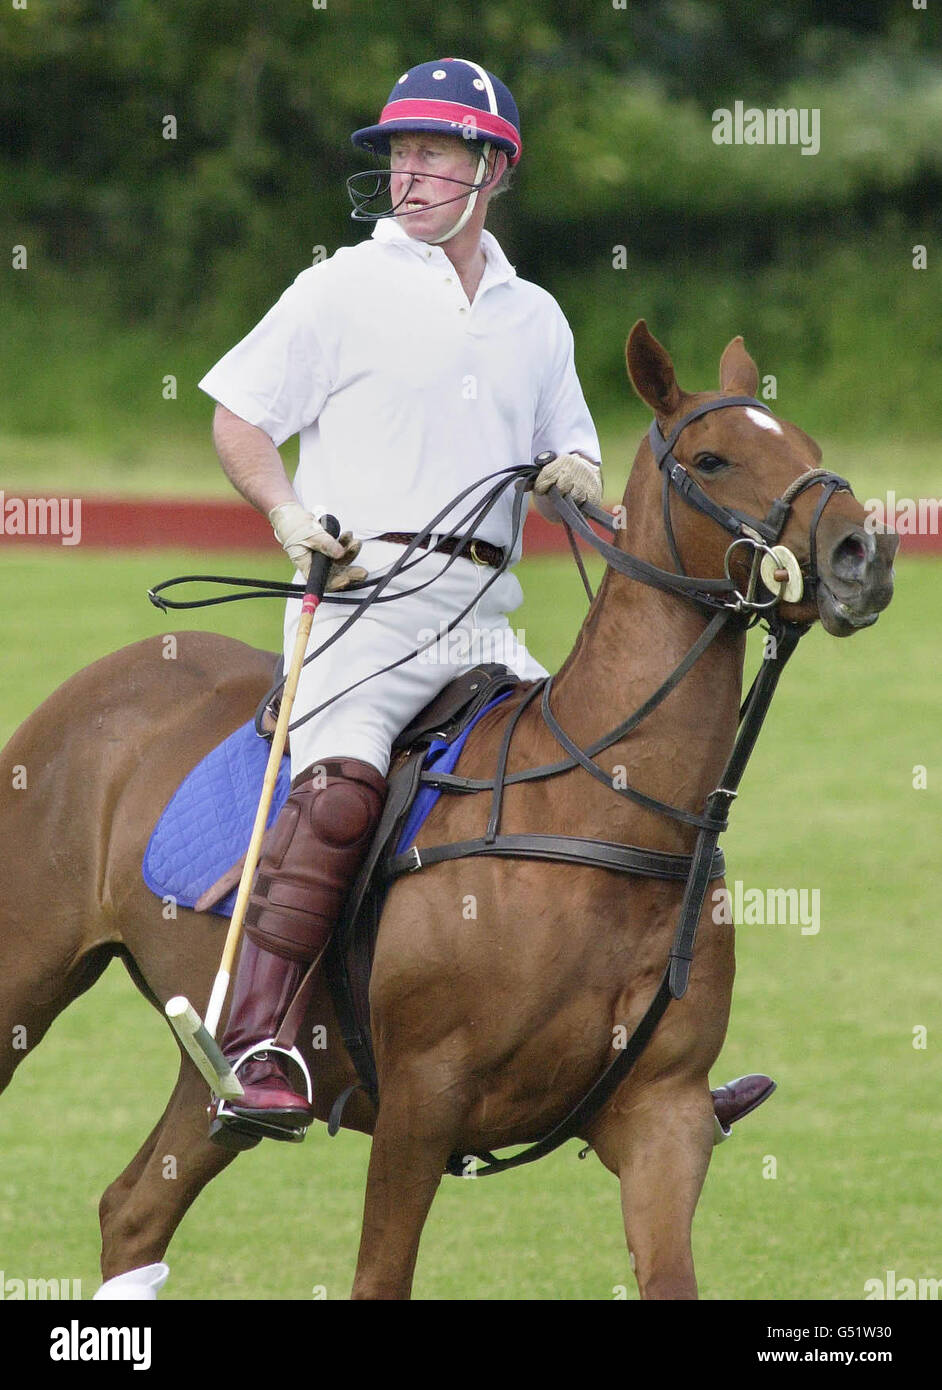 Prince Charles Polo Horse Stock Photos & Prince Charles Polo Horse ...